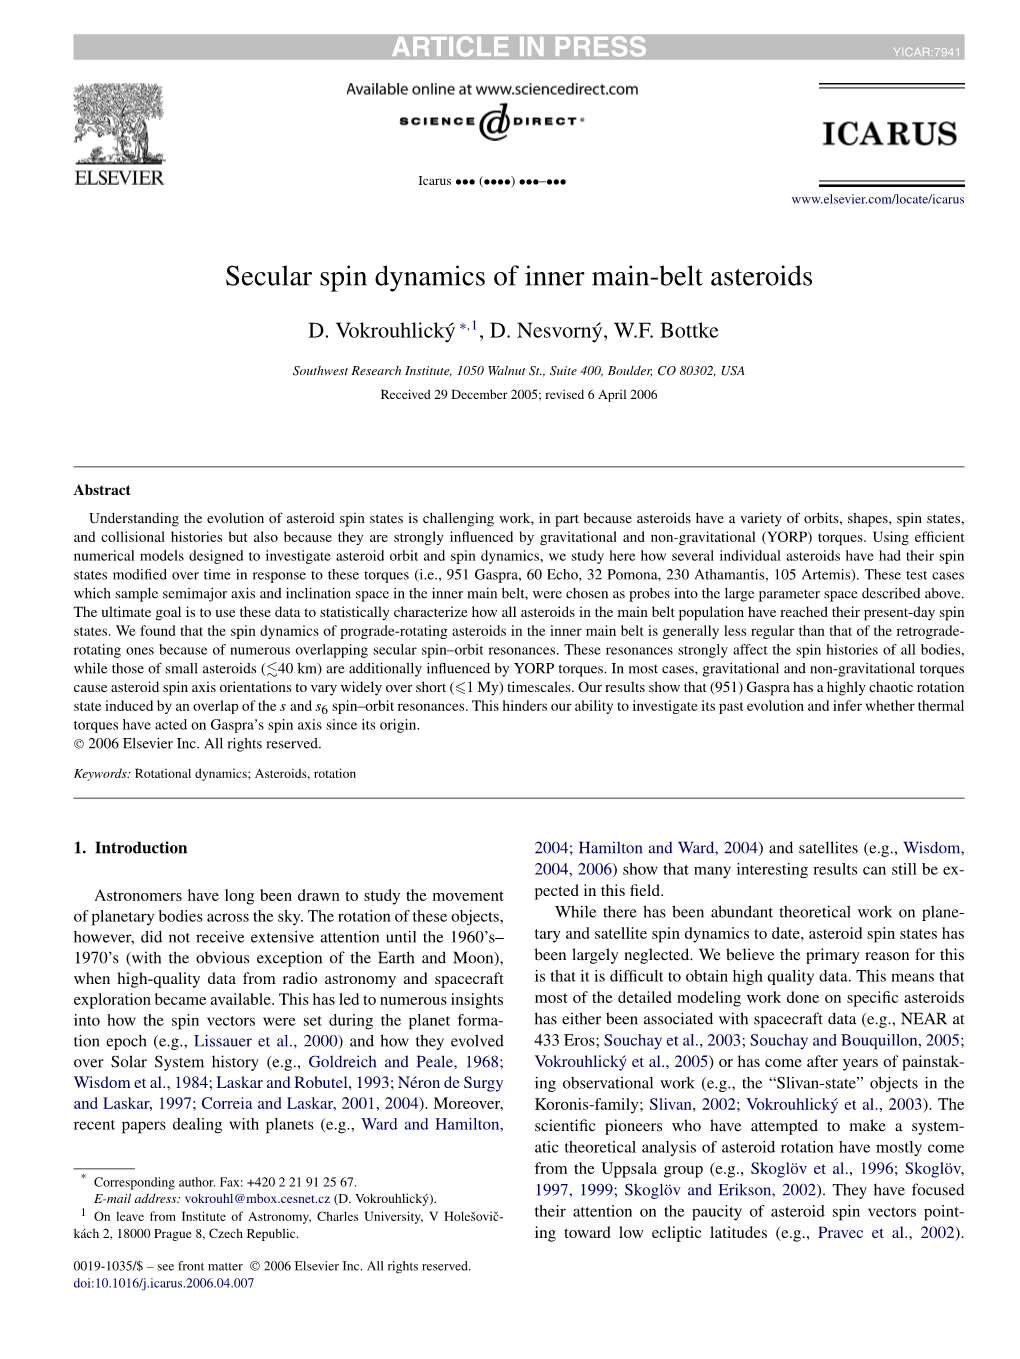 Secular Spin Dynamics of Inner Main-Belt Asteroids